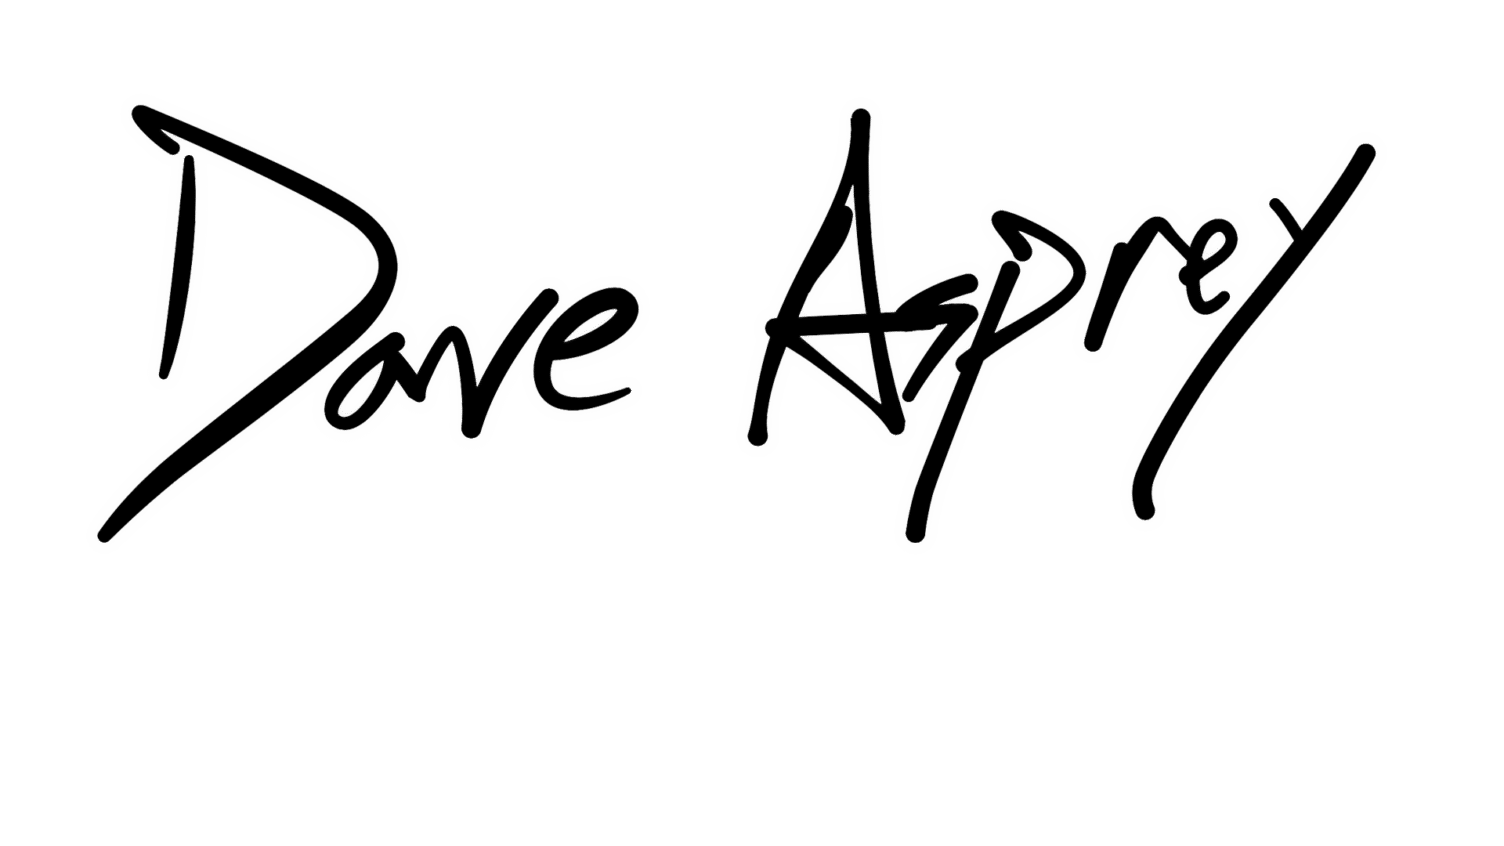 Dave Asprey Signature